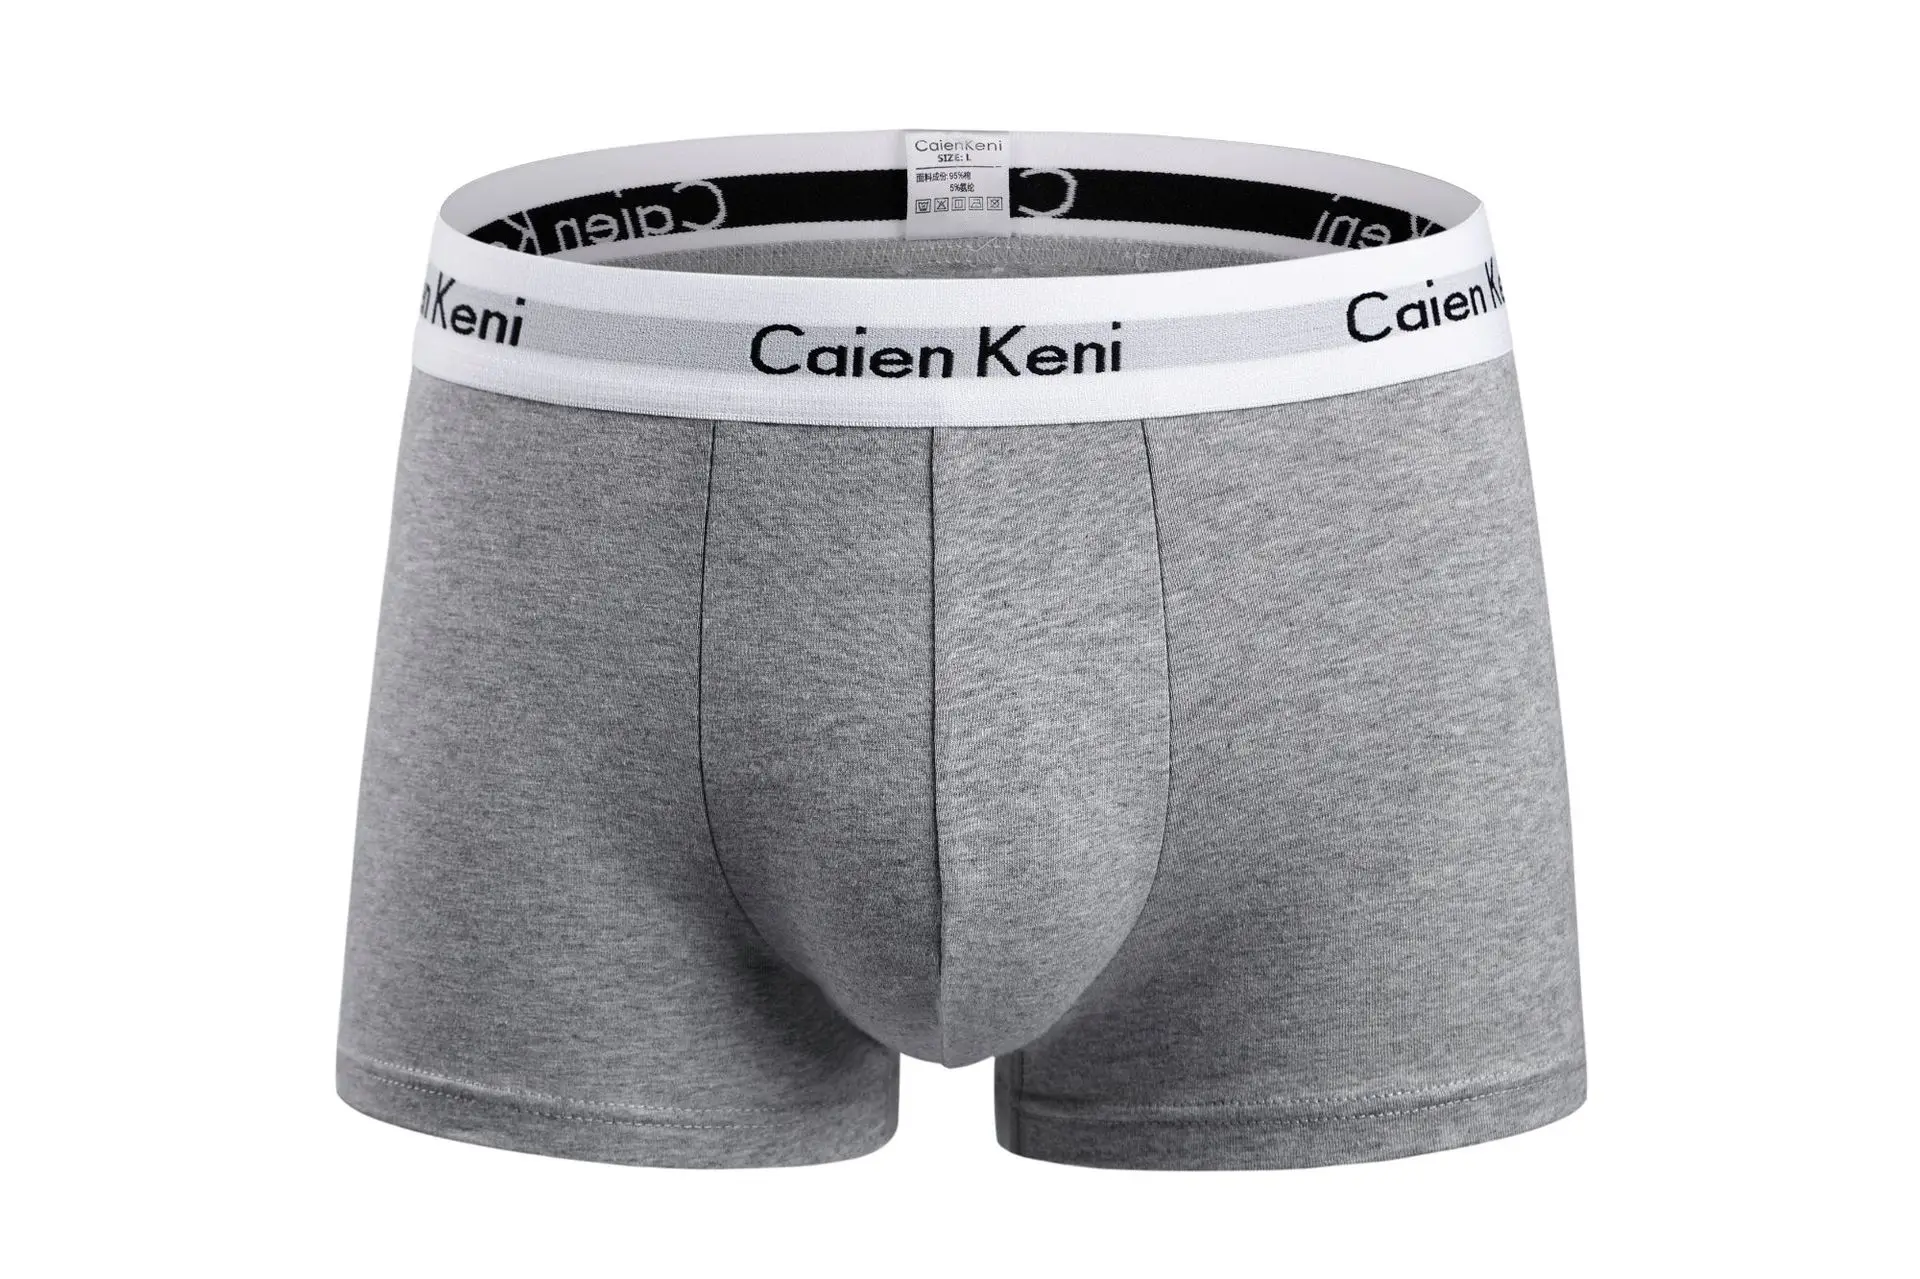 4pcs Breathable Cotton Boxers - Comfortable and Stylish Men's Underwear